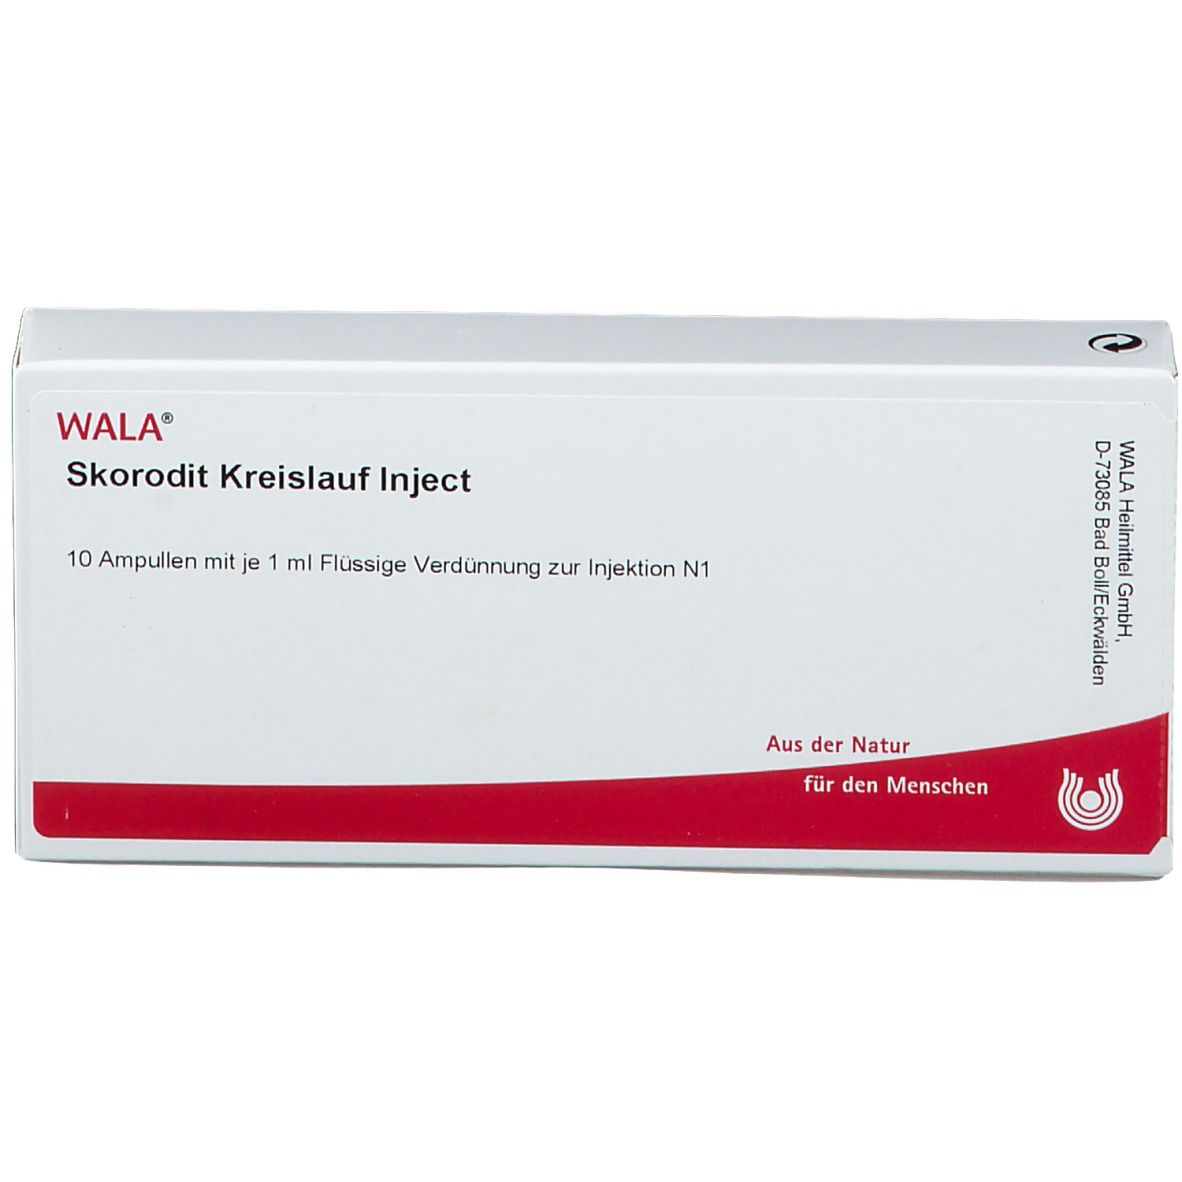 WALA® Skorodit Kreislauf Inject Amp.